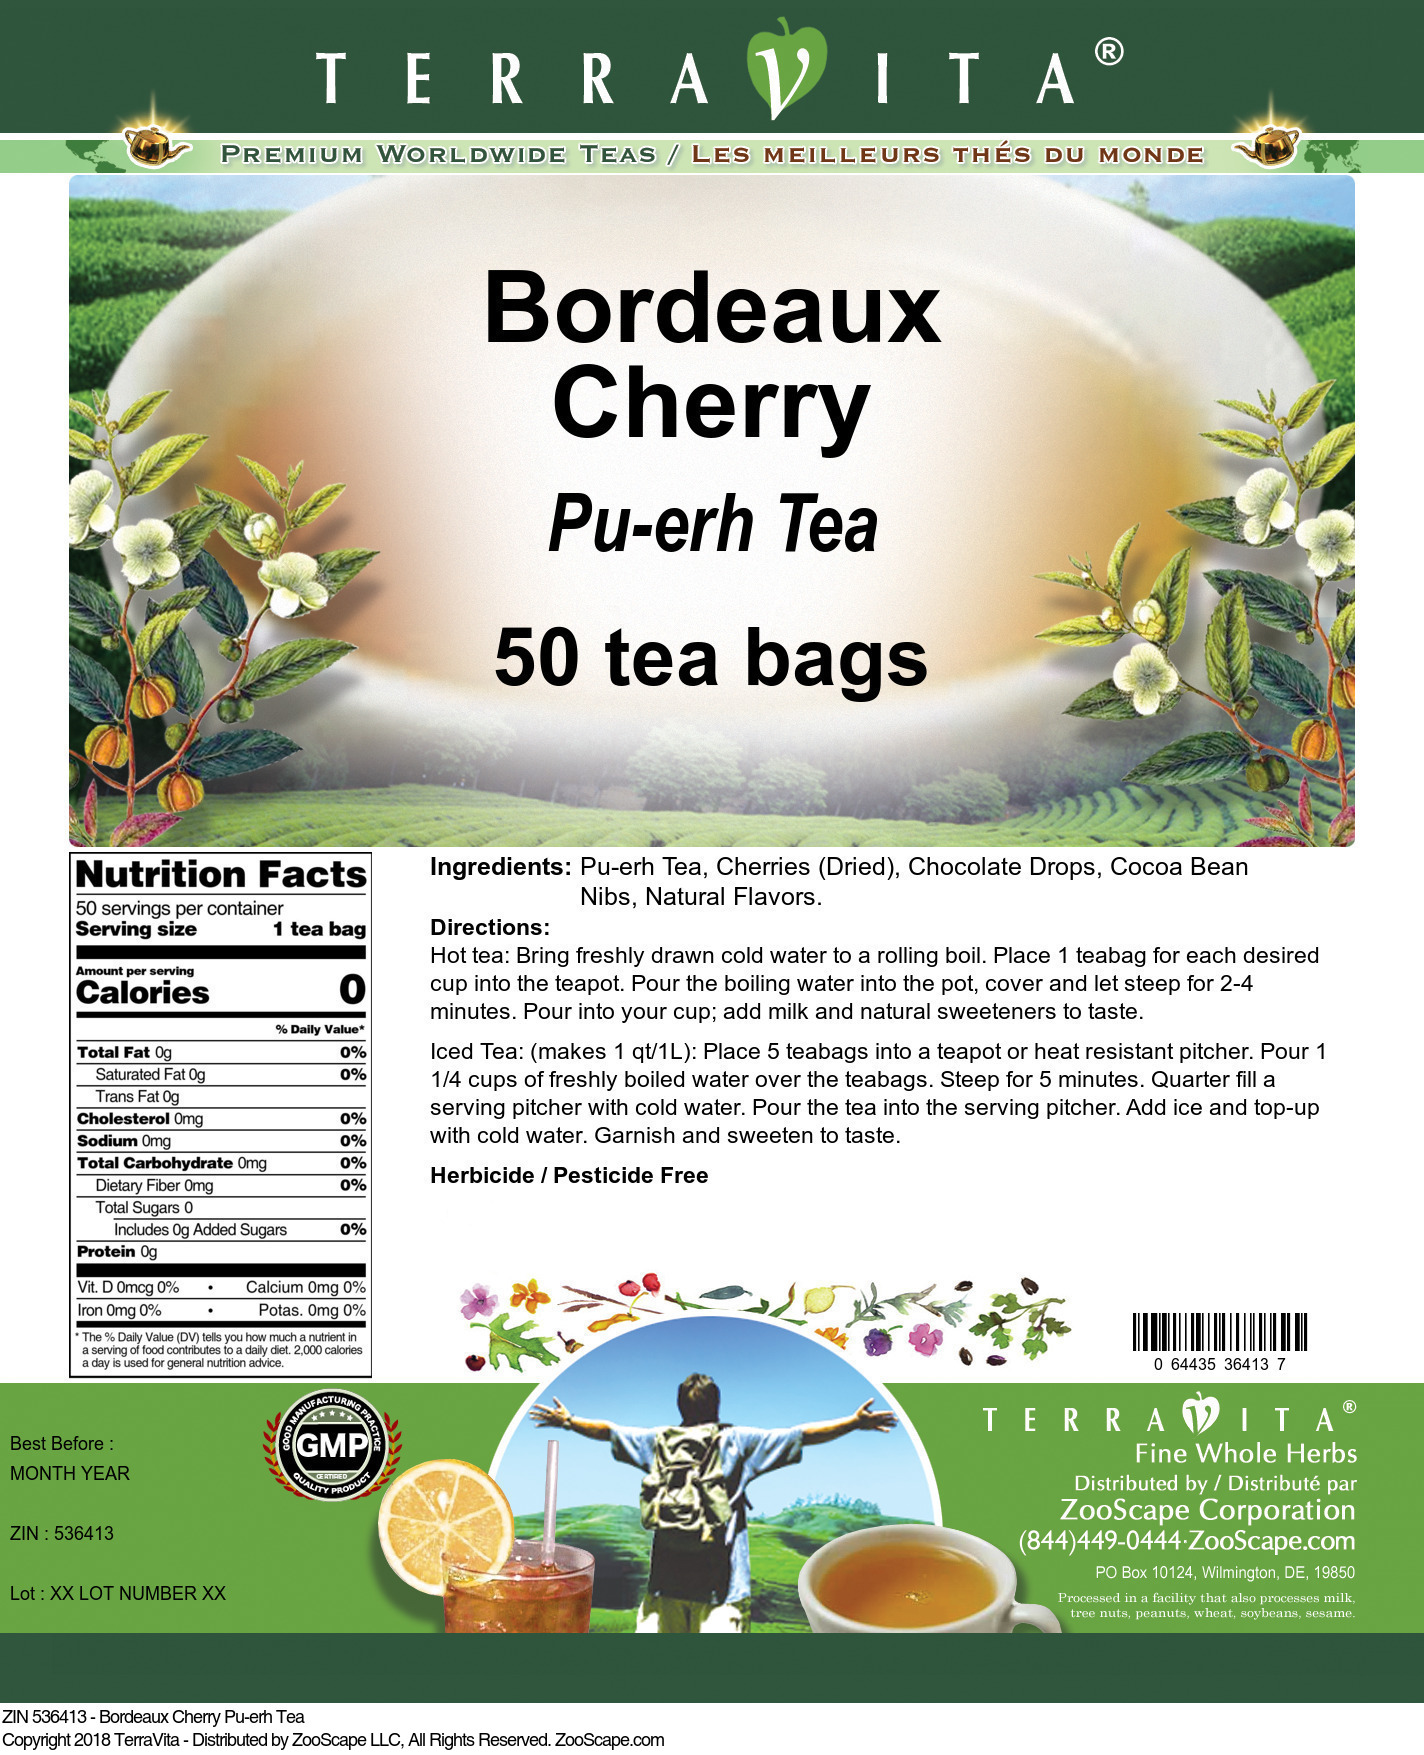 Bordeaux Cherry Pu-erh Tea - Label